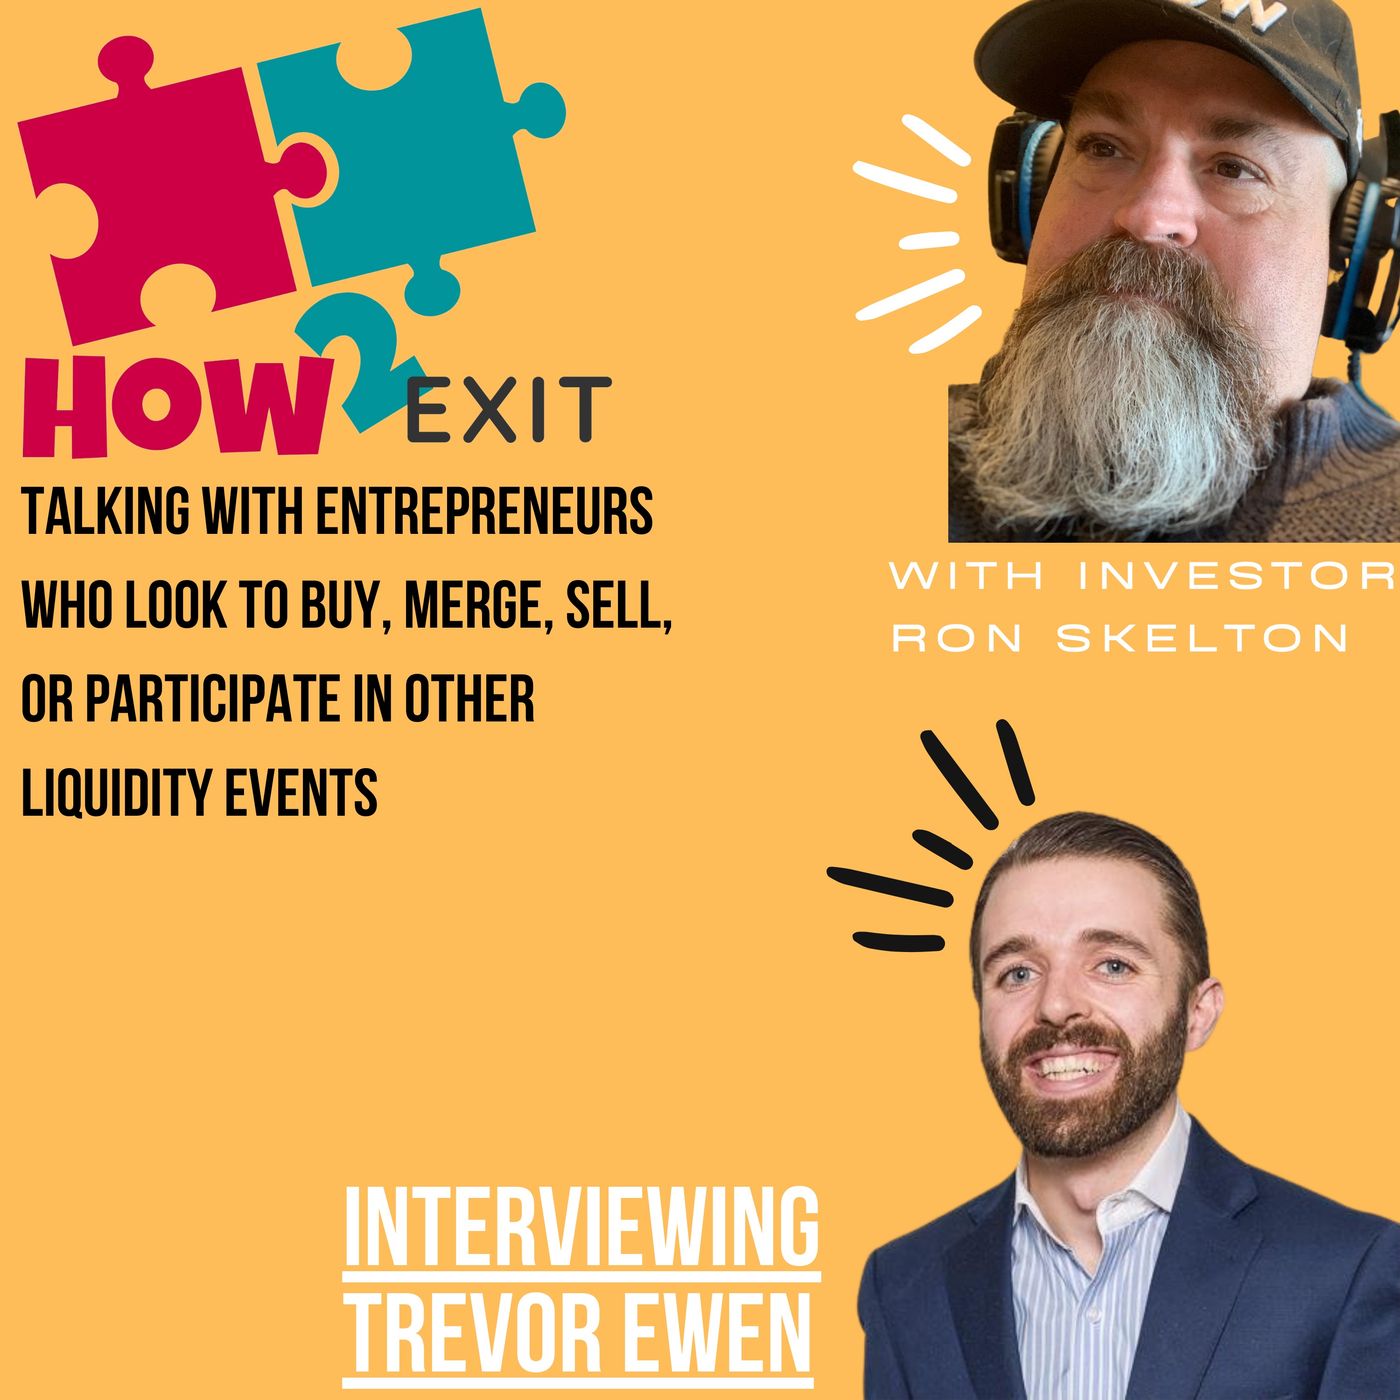 How2Exit Episode 52: Trevor Ewen - His a Software Engineer, Investor, and Entrepreneur. Image